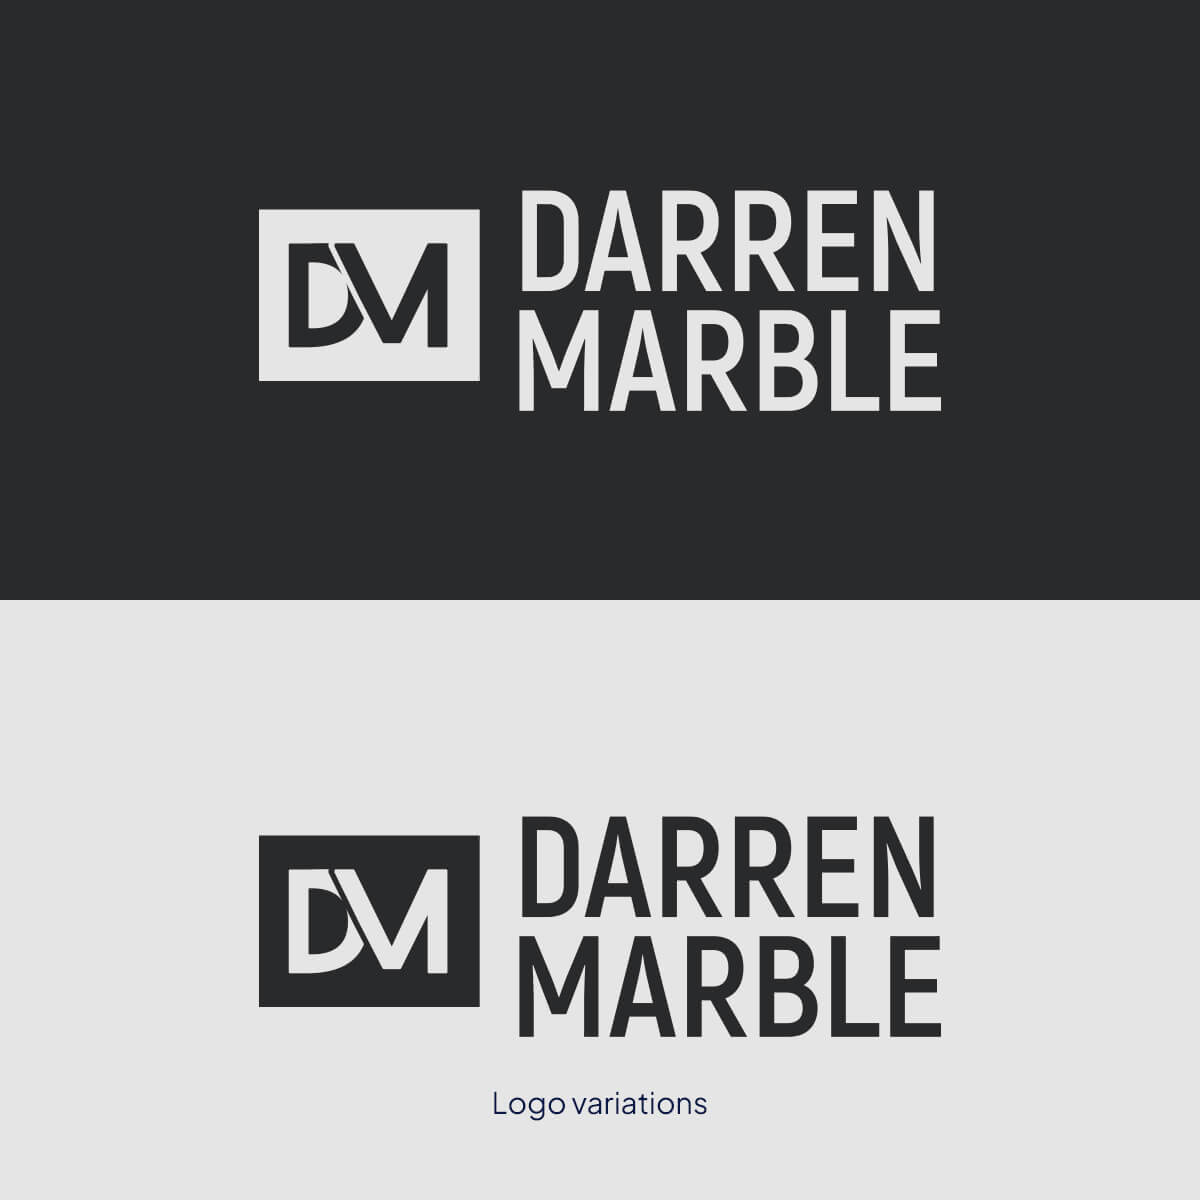 DM-logo